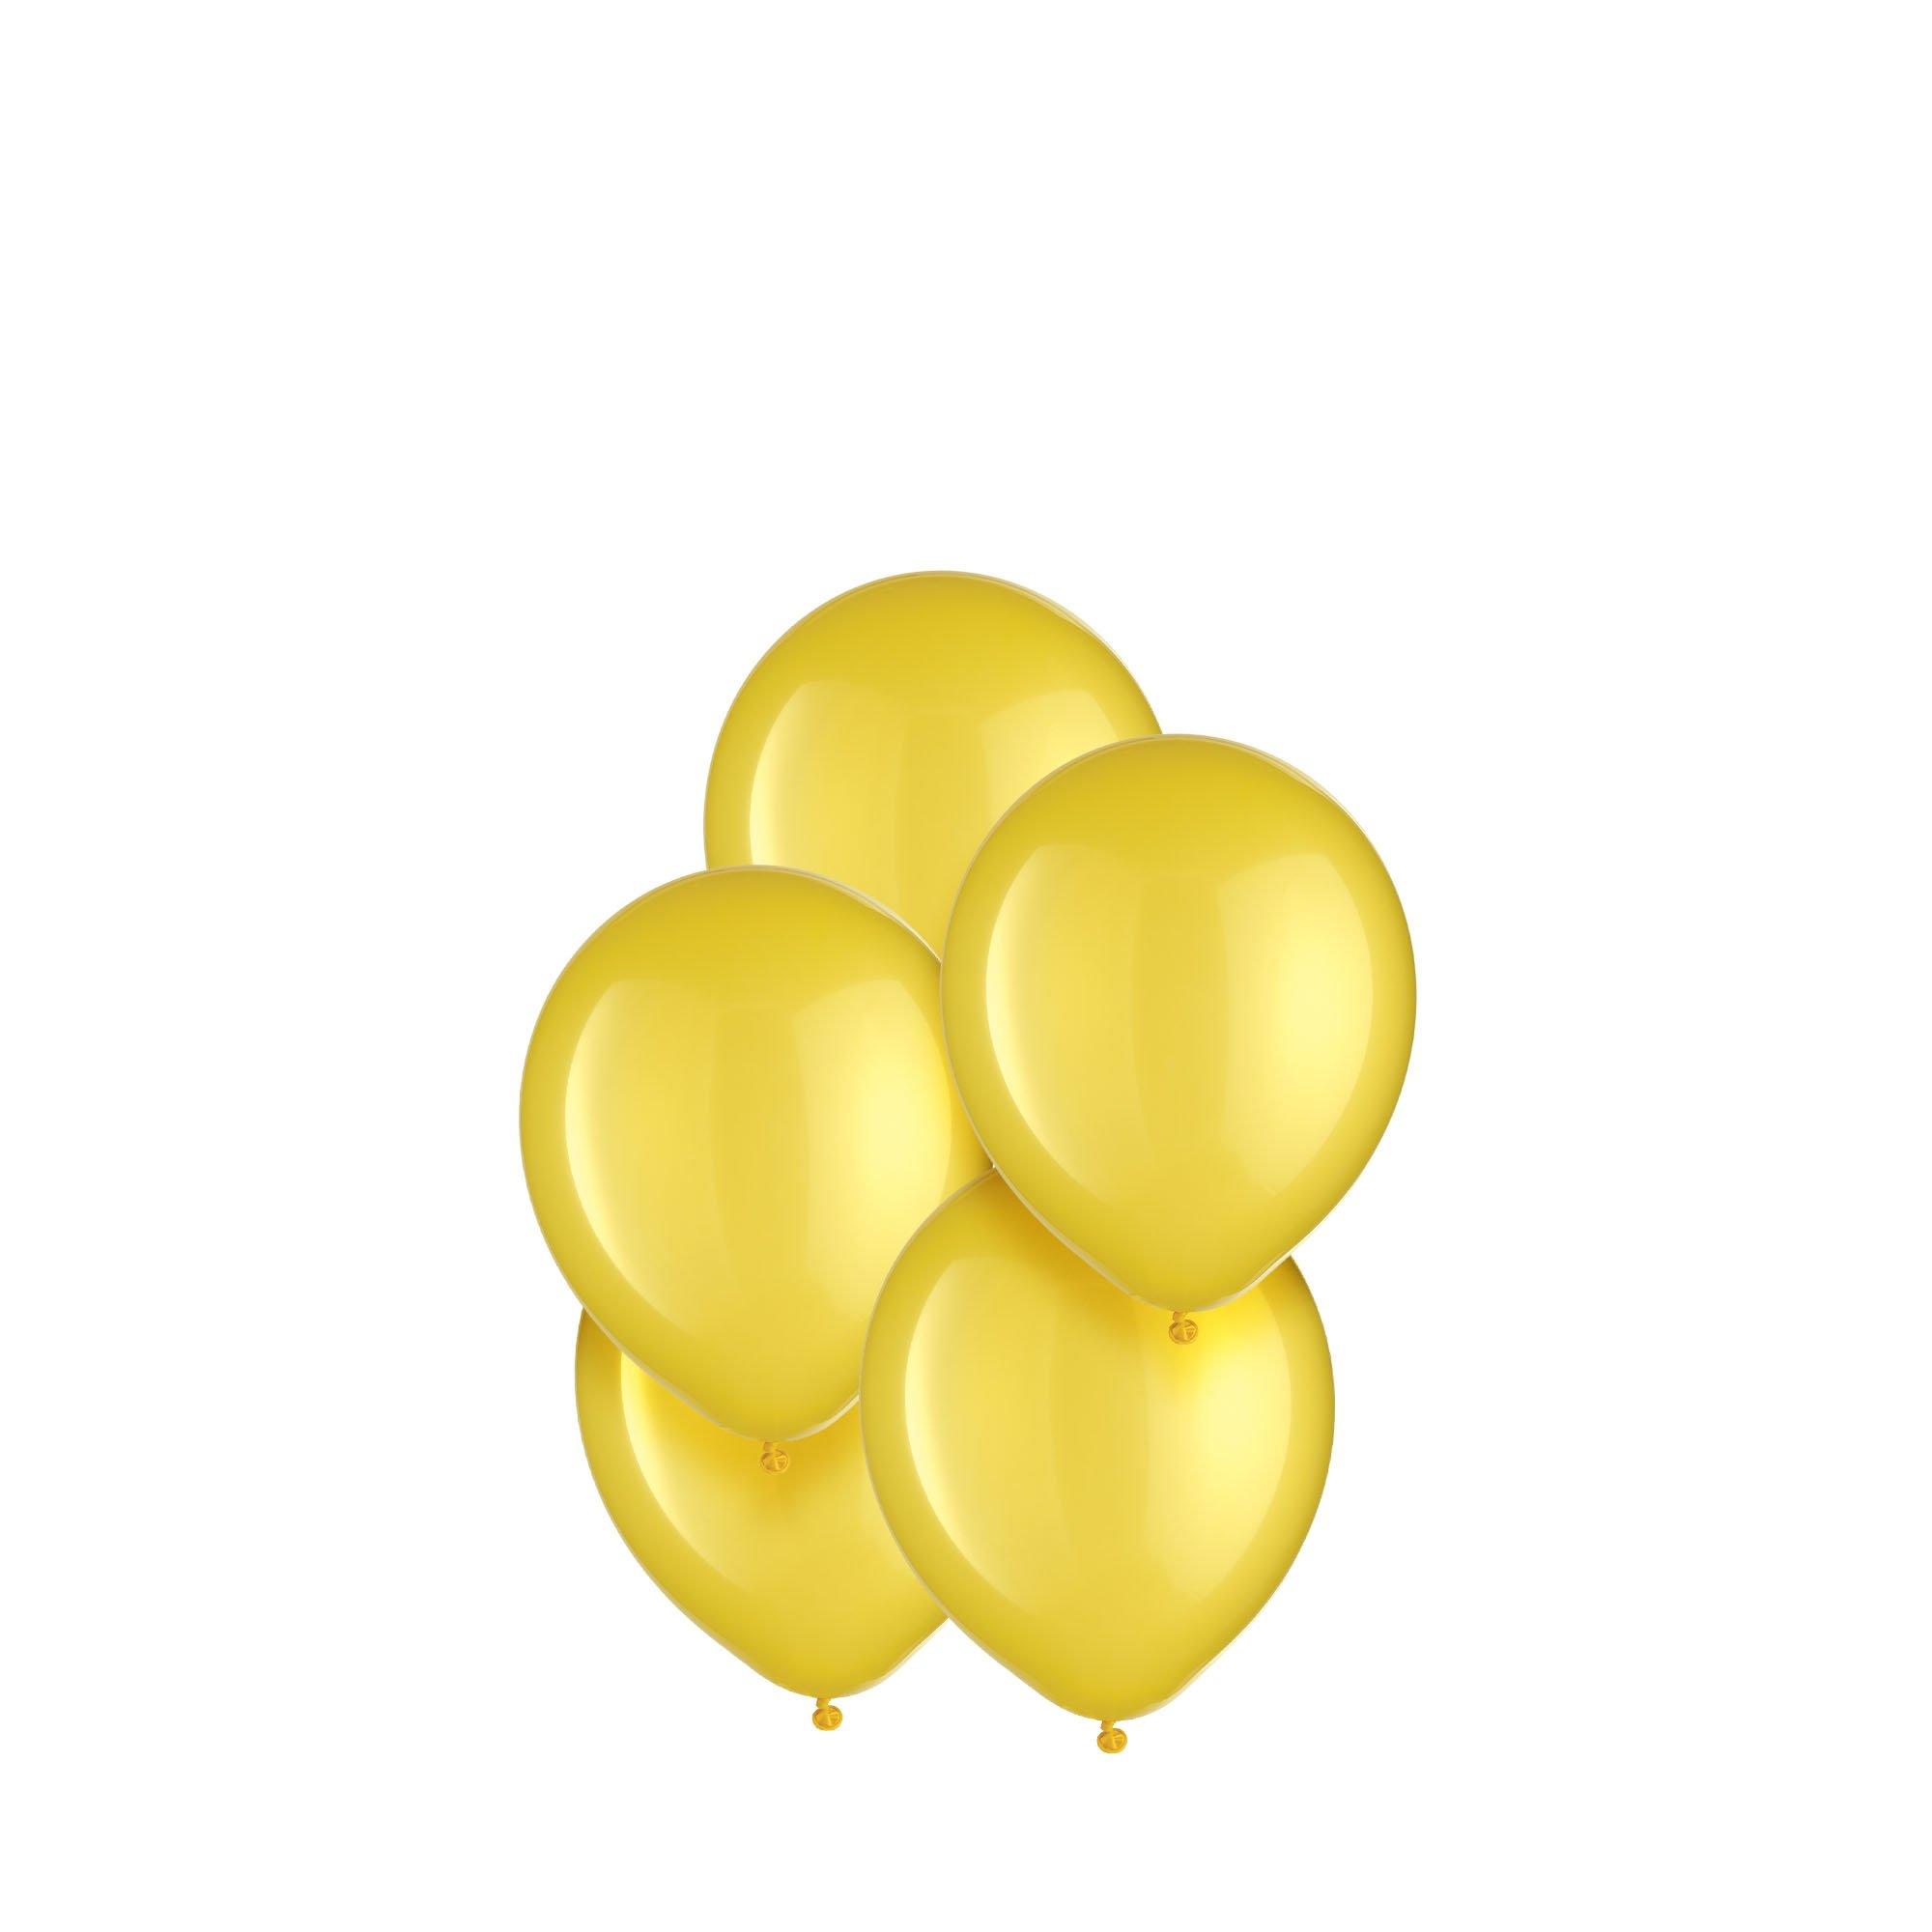 5 Oz. Yellow Balloon Weight